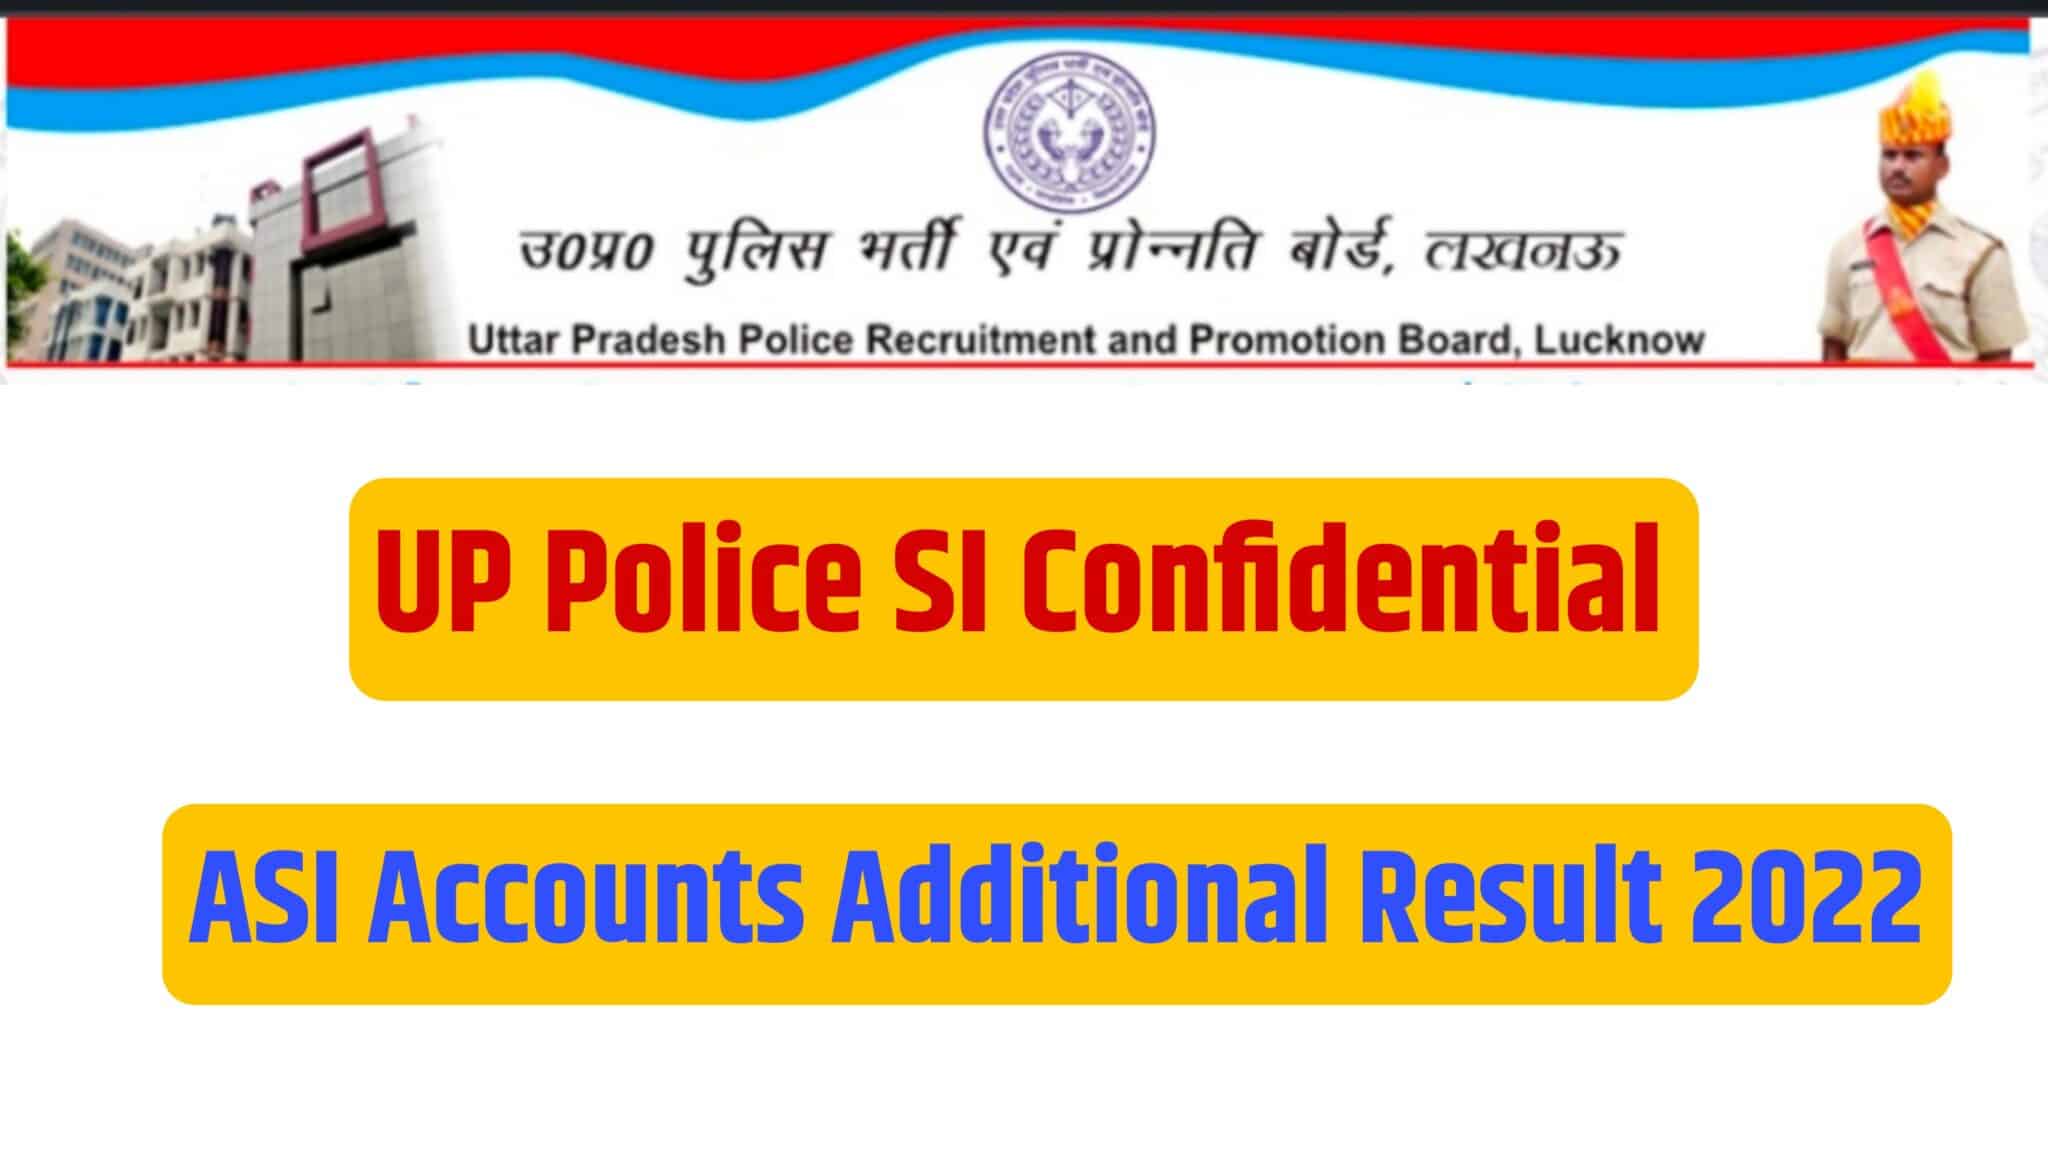 UP Police SI Confidential, ASI Accounts Additional Result 2022 | यूपी पुलिस एएसआई एडिशनल रिजल्ट जारी